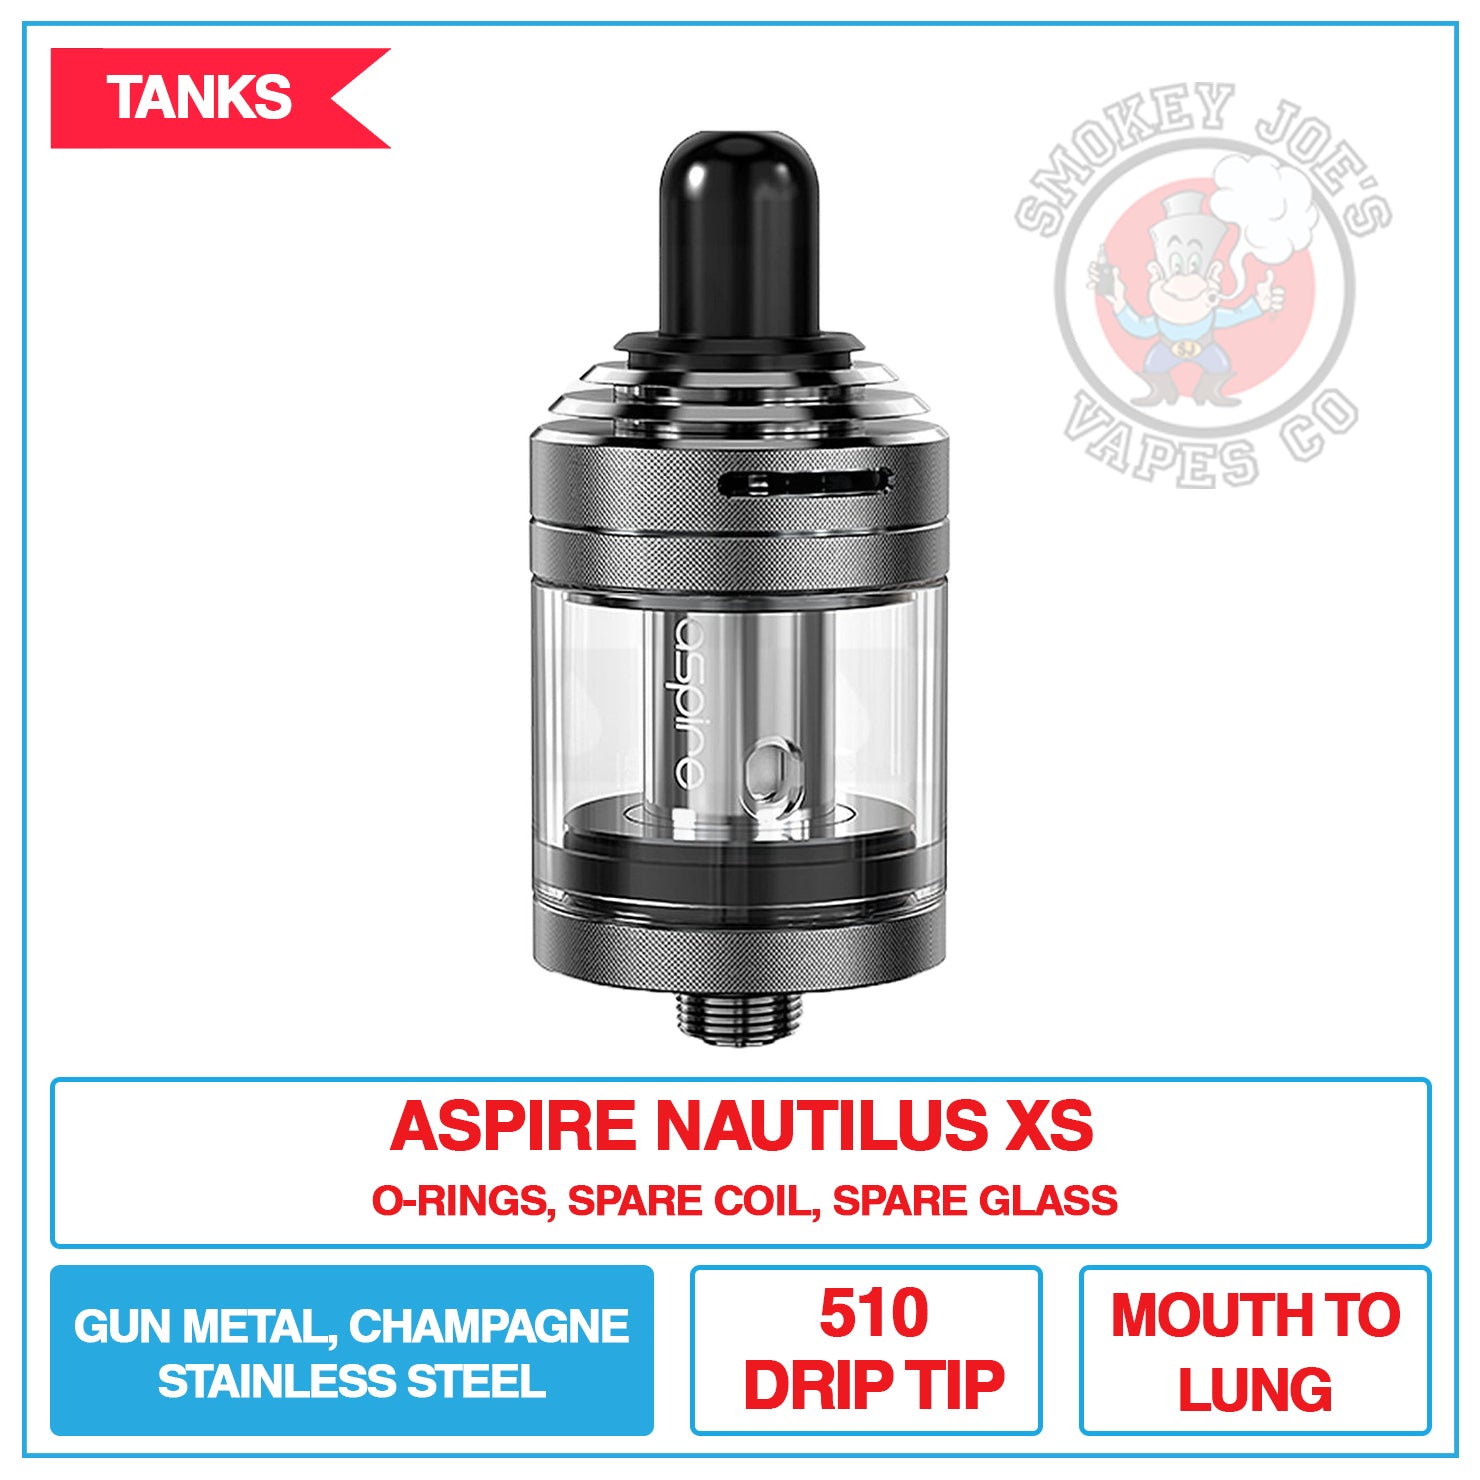 Tanks - Aspire Vape Co.